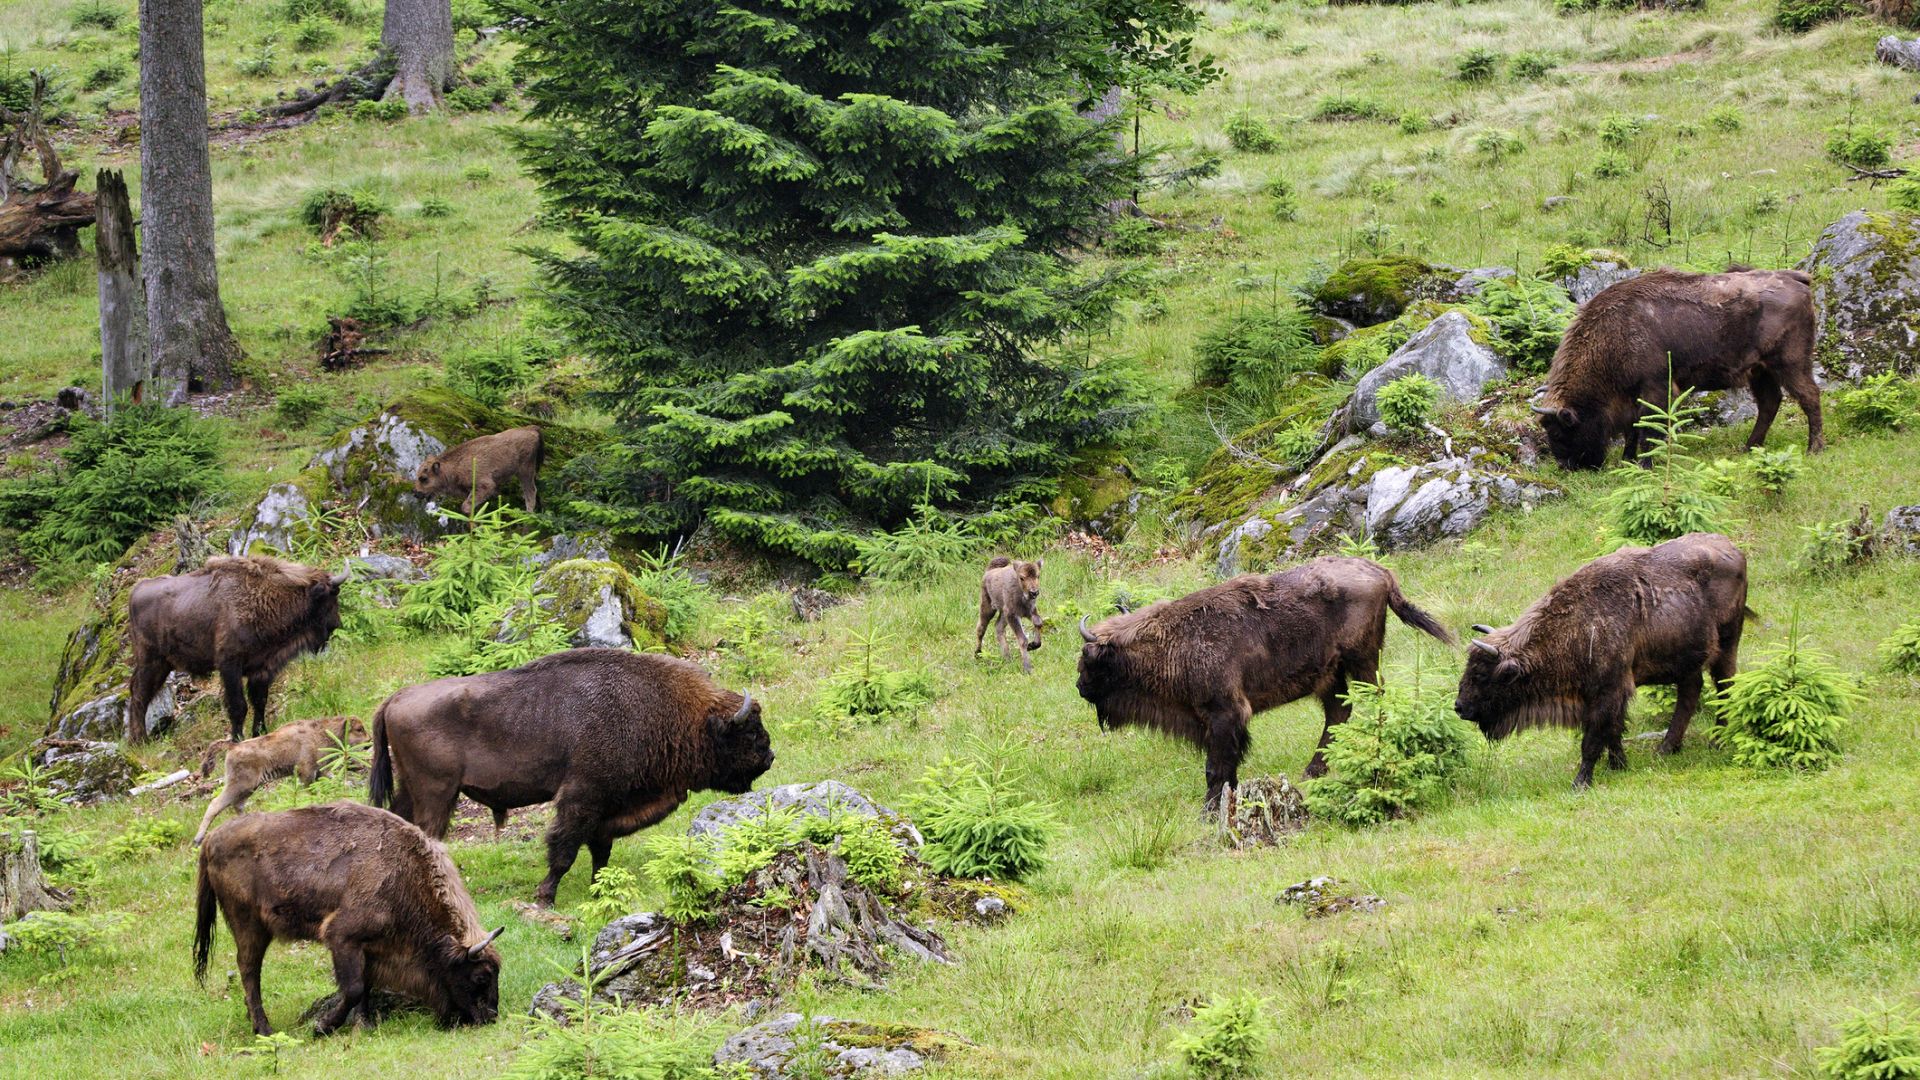 Freyung-Grafenau: Bisons in the Bavarian Forest National Park